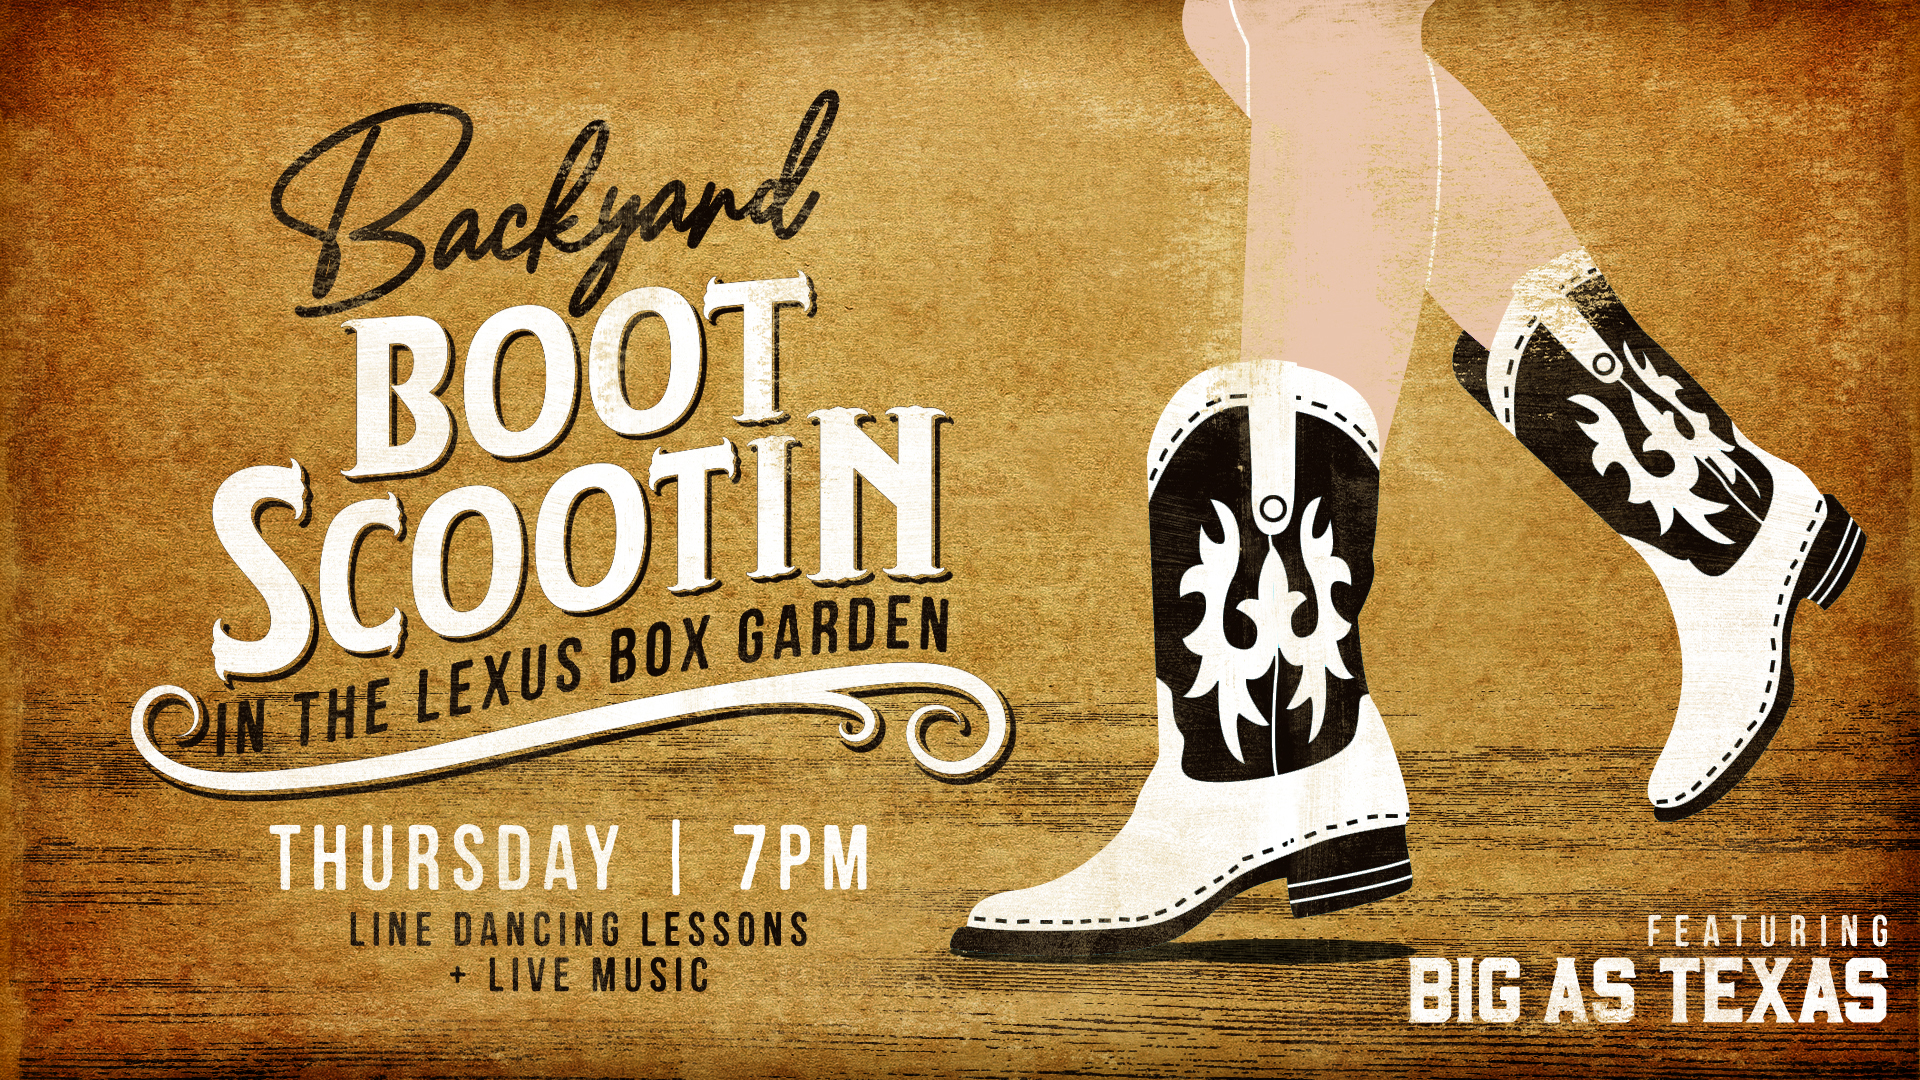 Promo image of Backyard Boot Scootin'